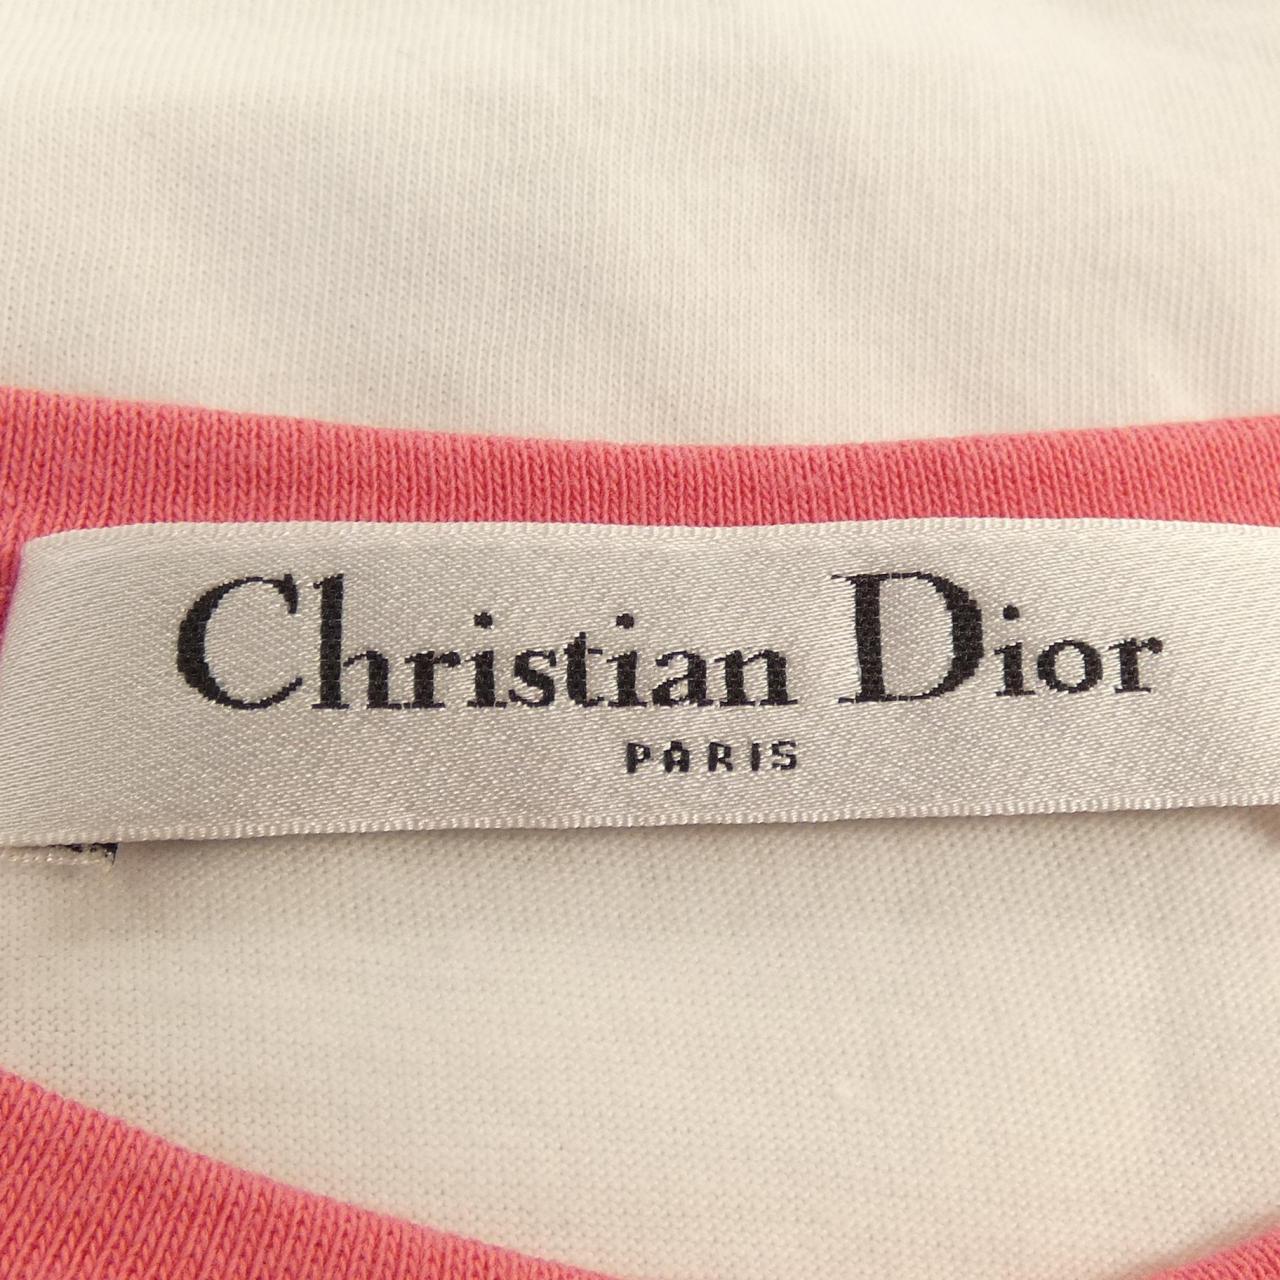 Christian Dior shirtメンズ